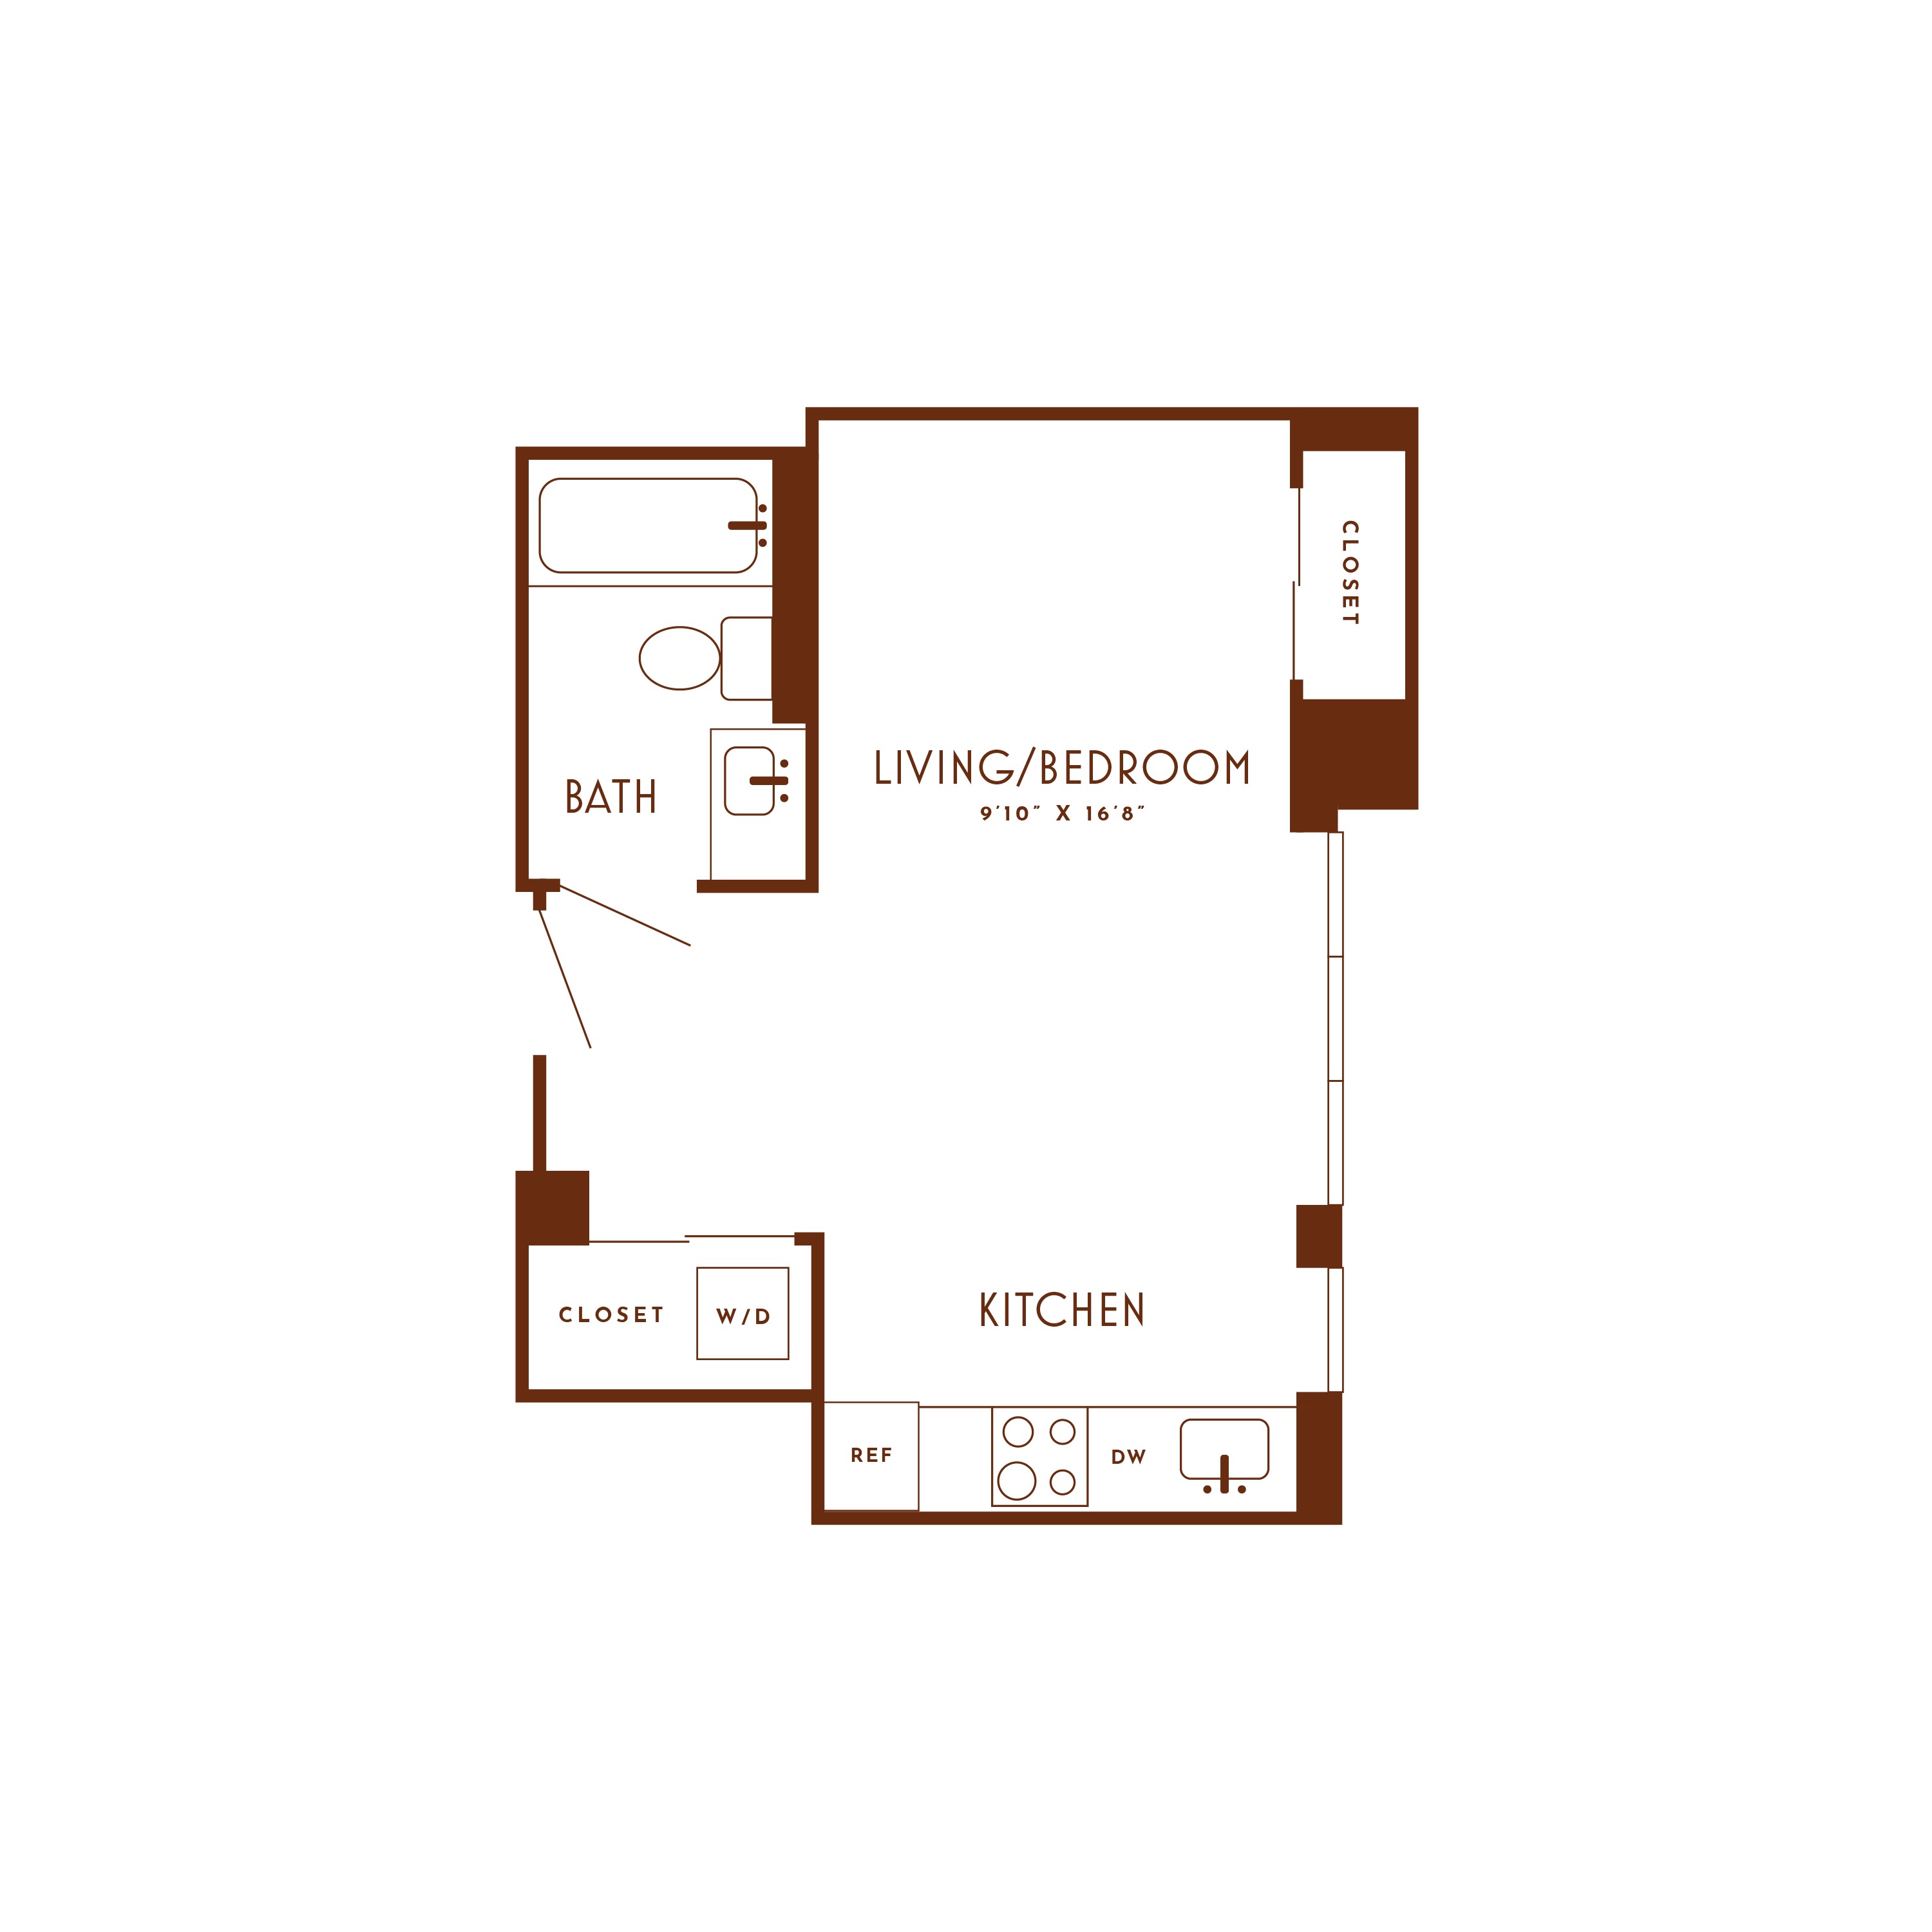 Floor plan image of unit 808